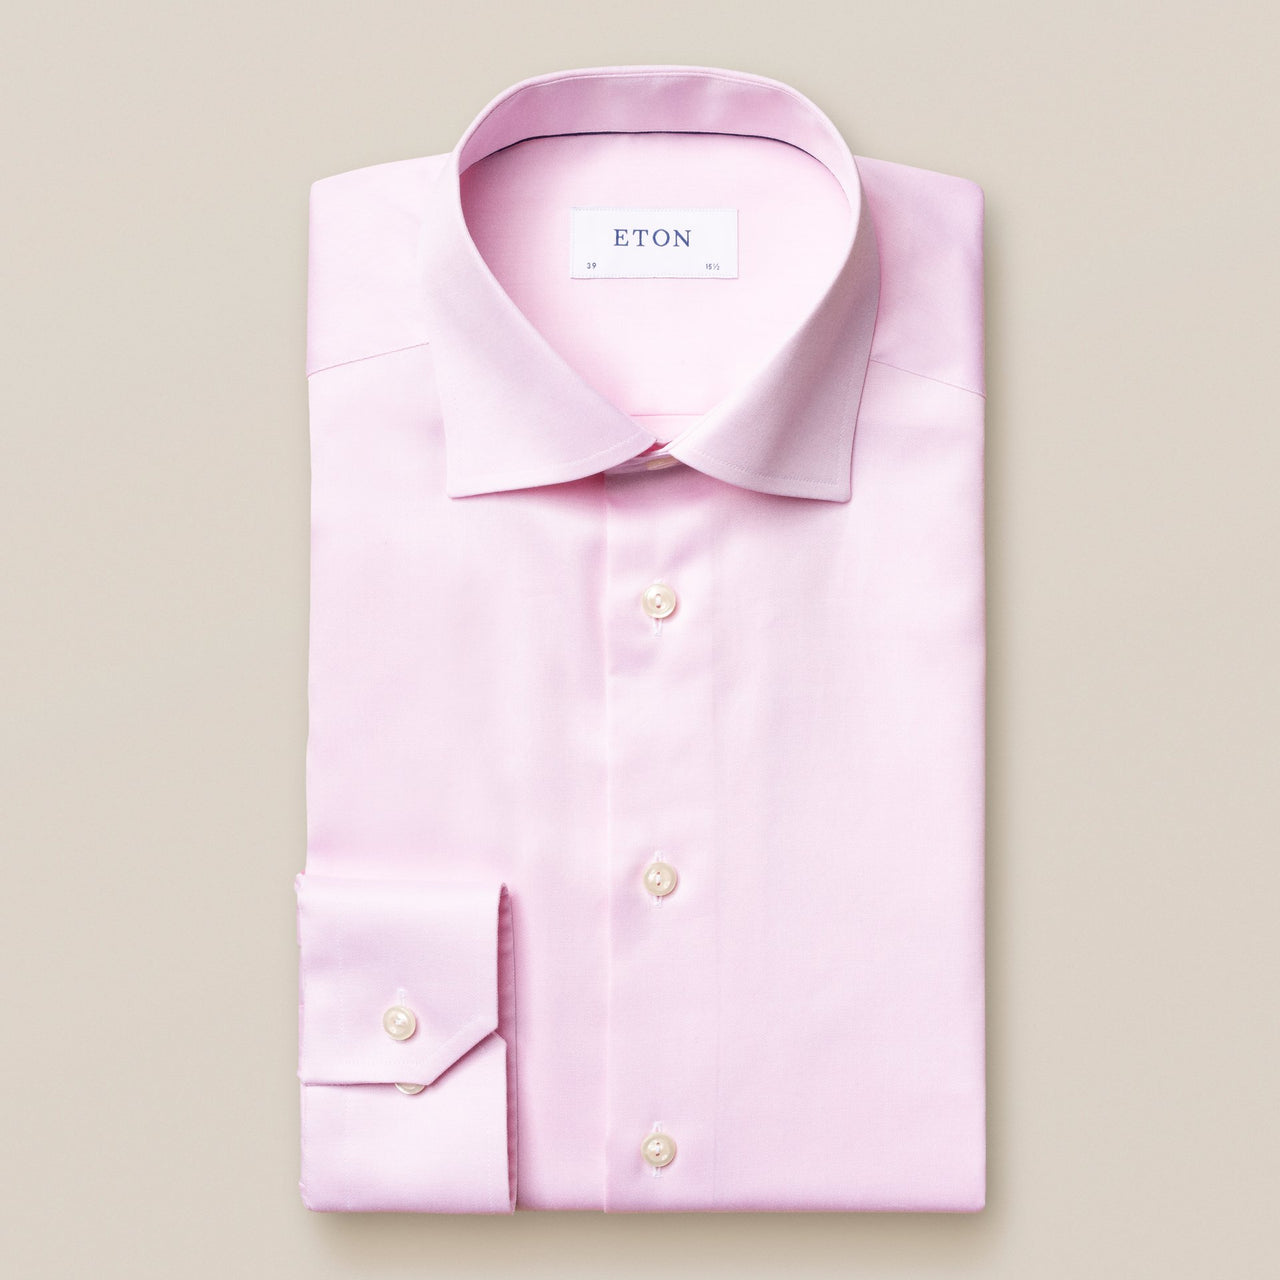 ETON plain buttoned shirt light pink SC-CONTEMPORARY FIT